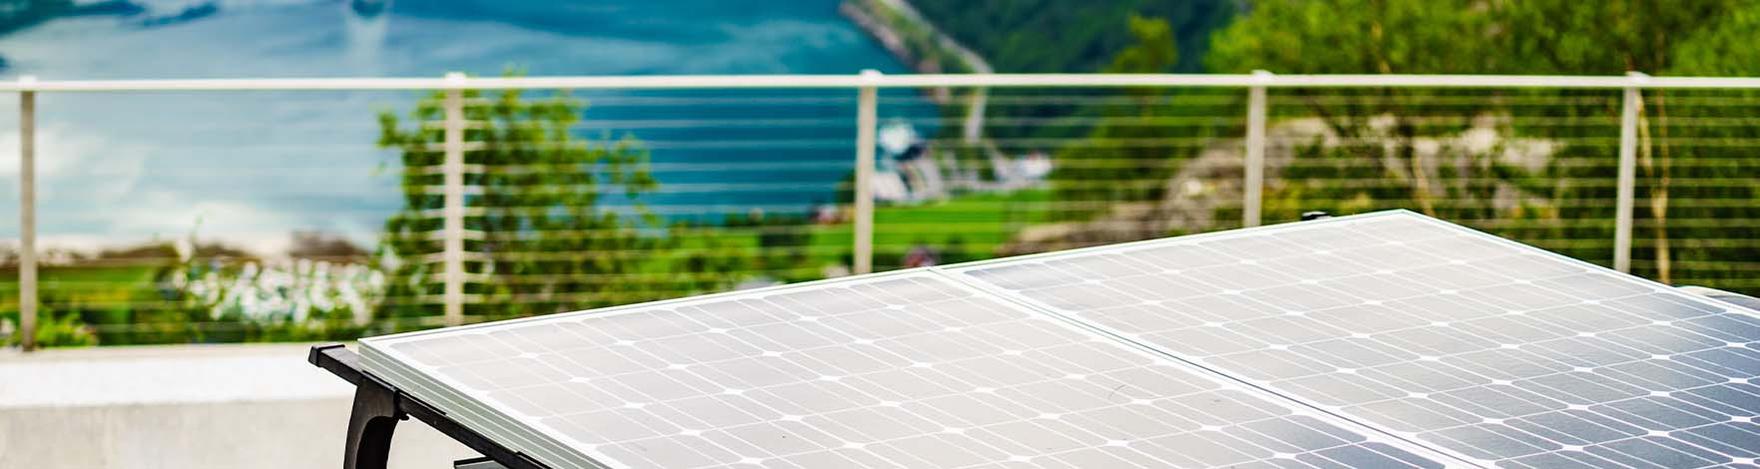 Solar Panel Quantity Blog Banner